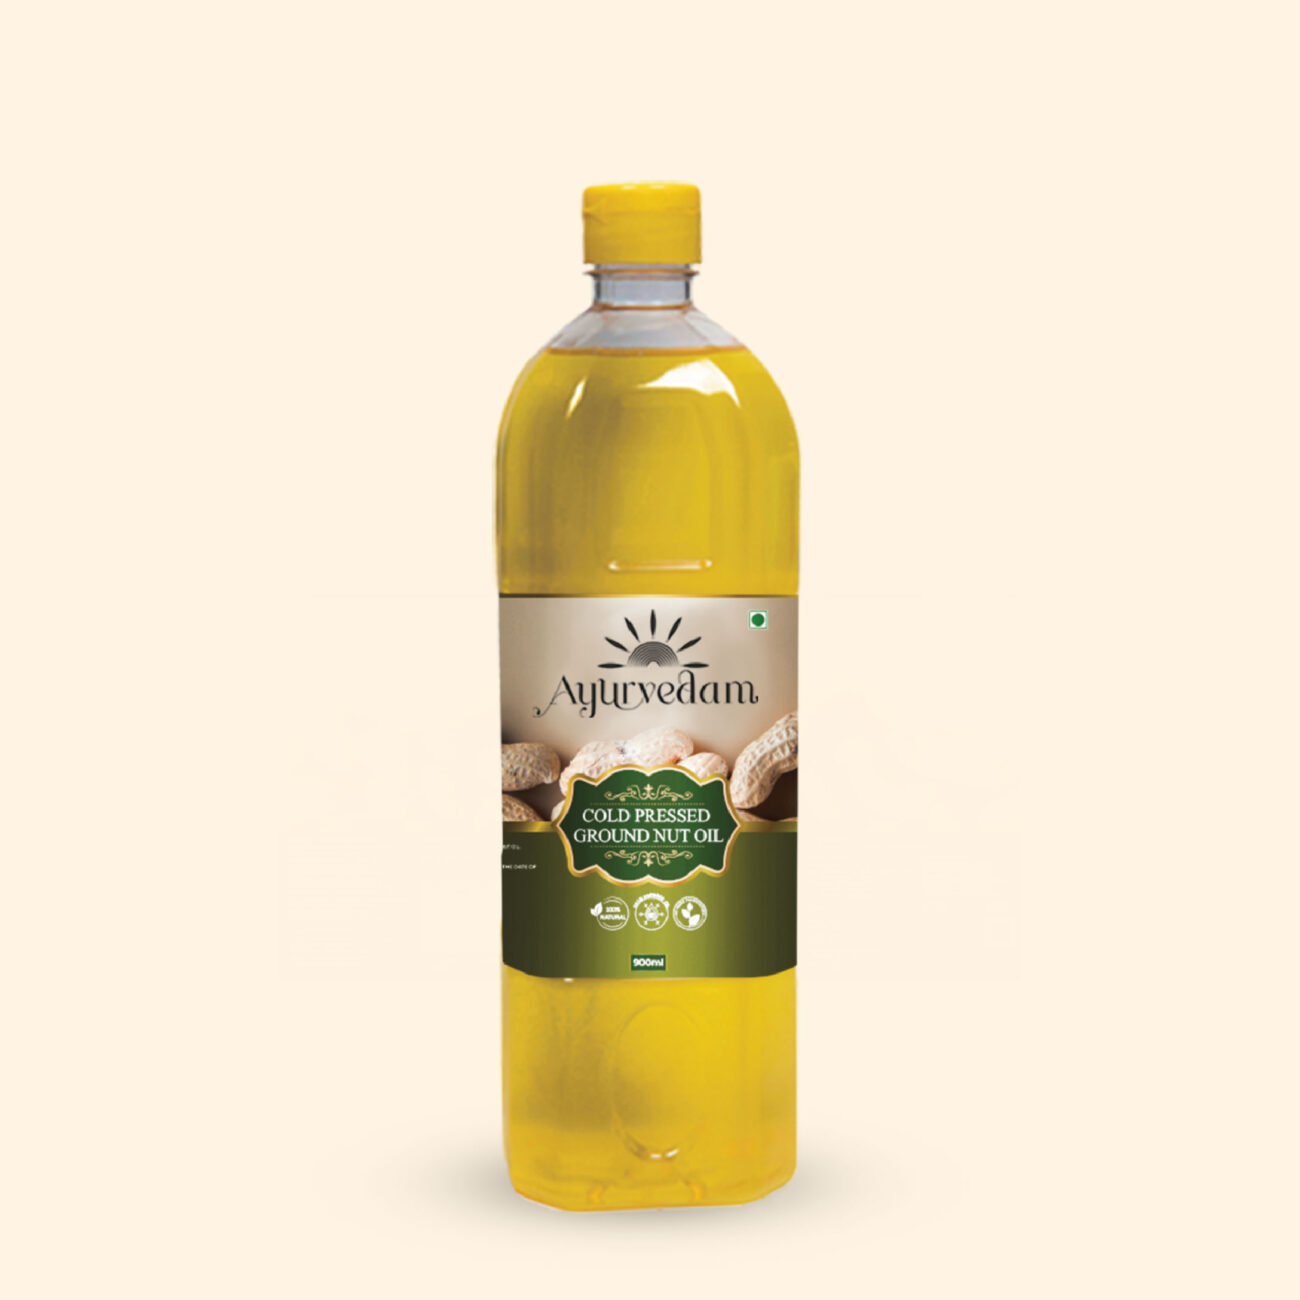 A golden colour Cold Pressed Groundnut Oil bottle